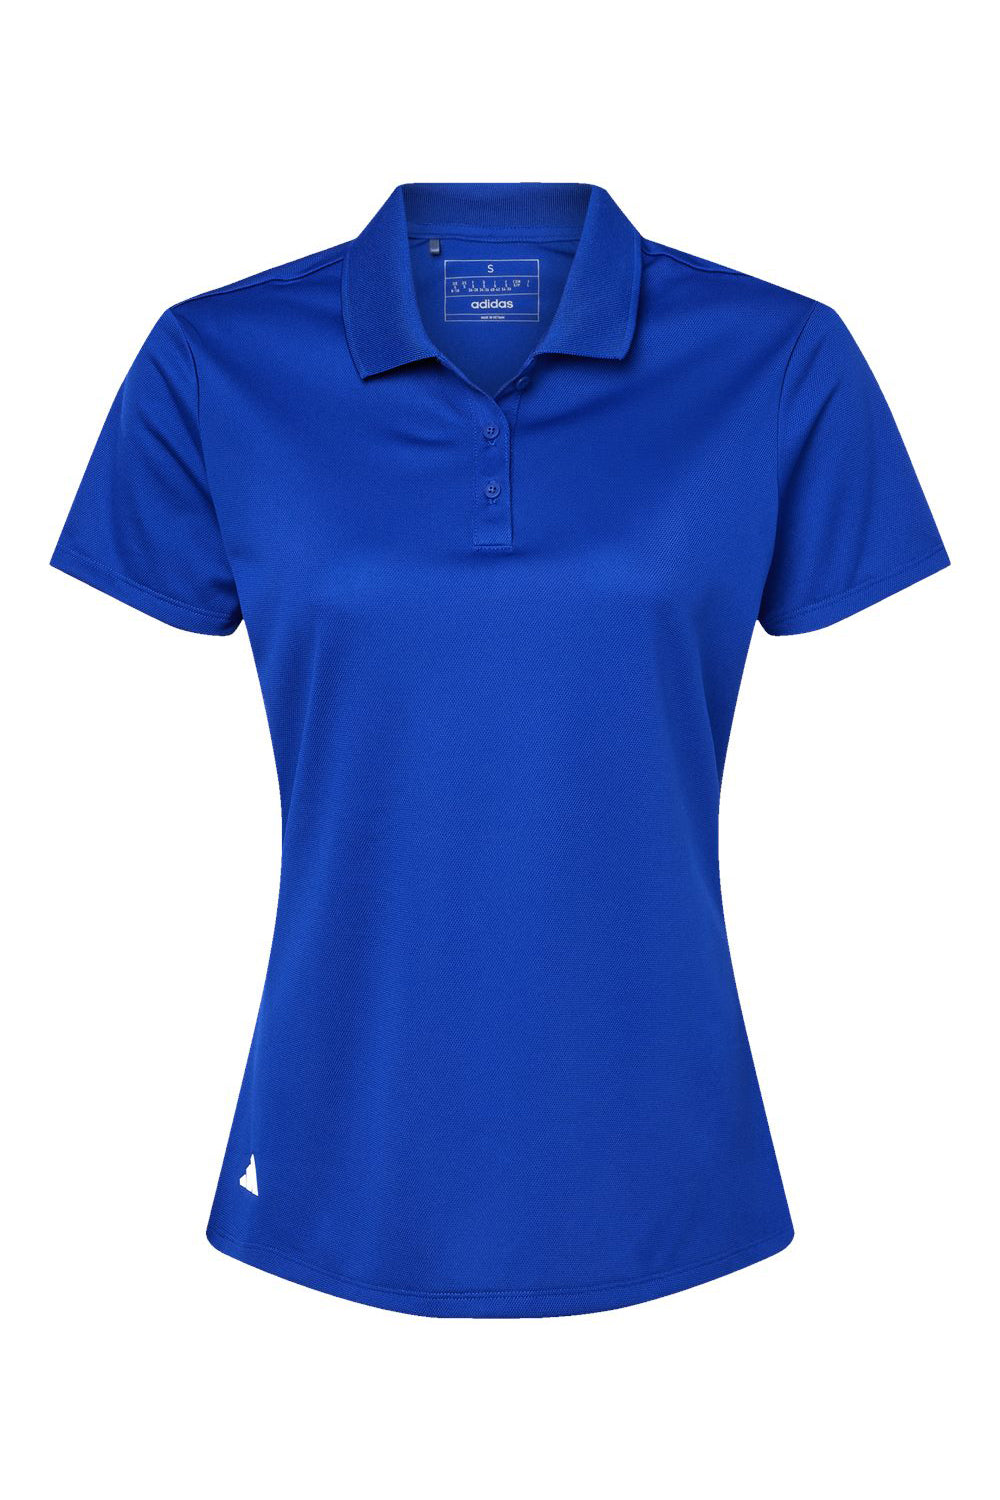 Adidas A431 Womens Basic Short Sleeve Polo Shirt Collegiate Royal Blue Flat Front